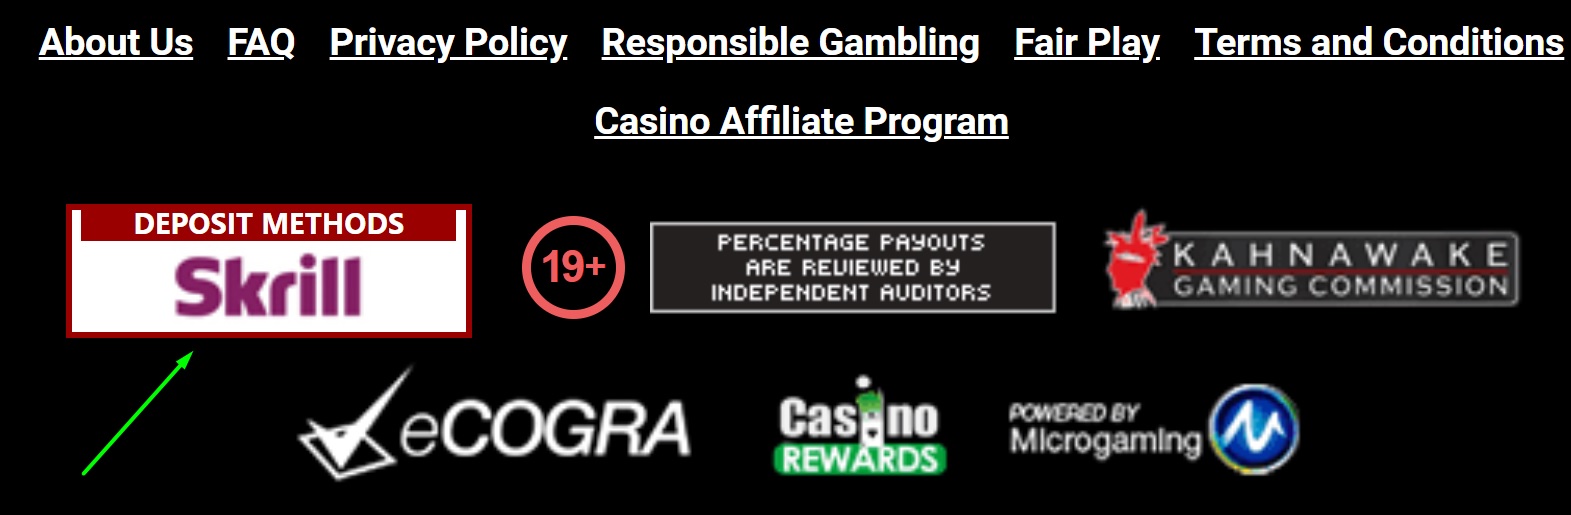 Quatro casino metody vkladov